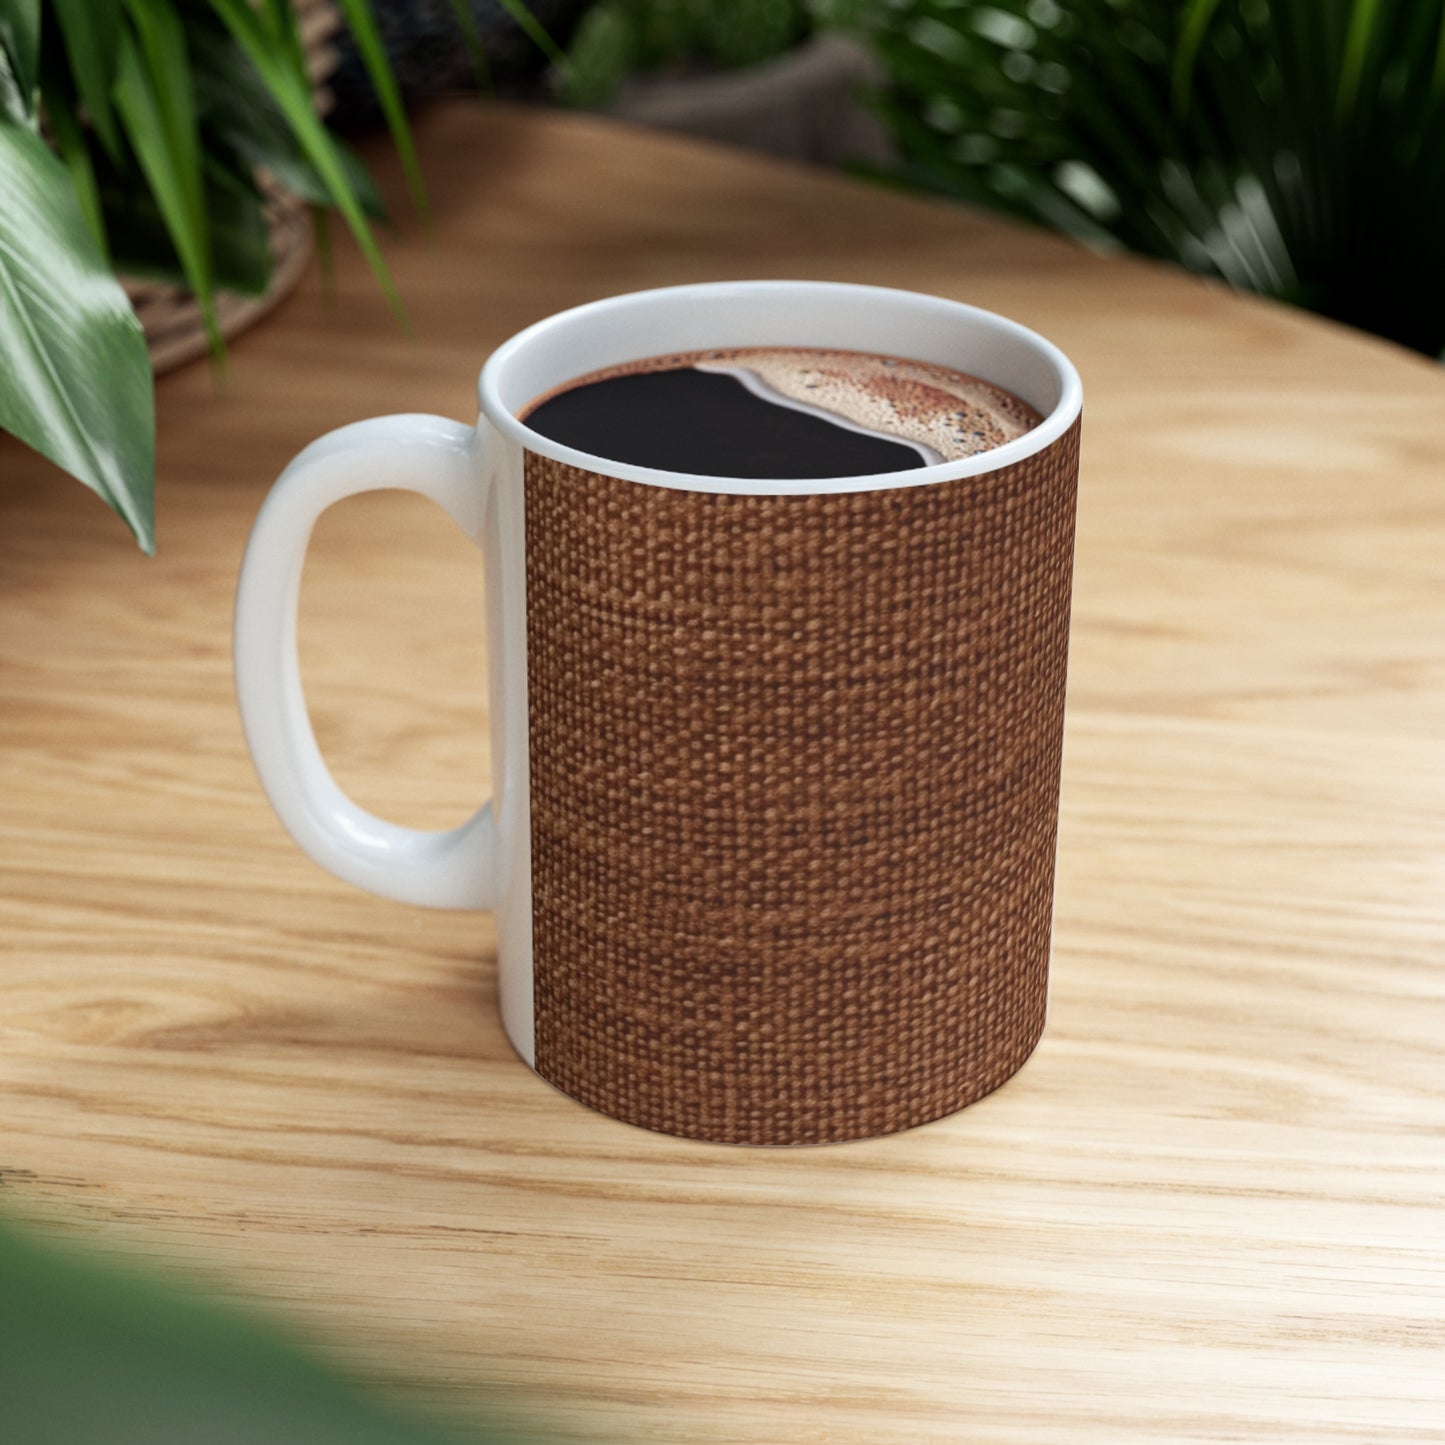 Luxe Dark Brown: Denim-Inspired, Distinctively Textured Fabric - Ceramic Mug 11oz